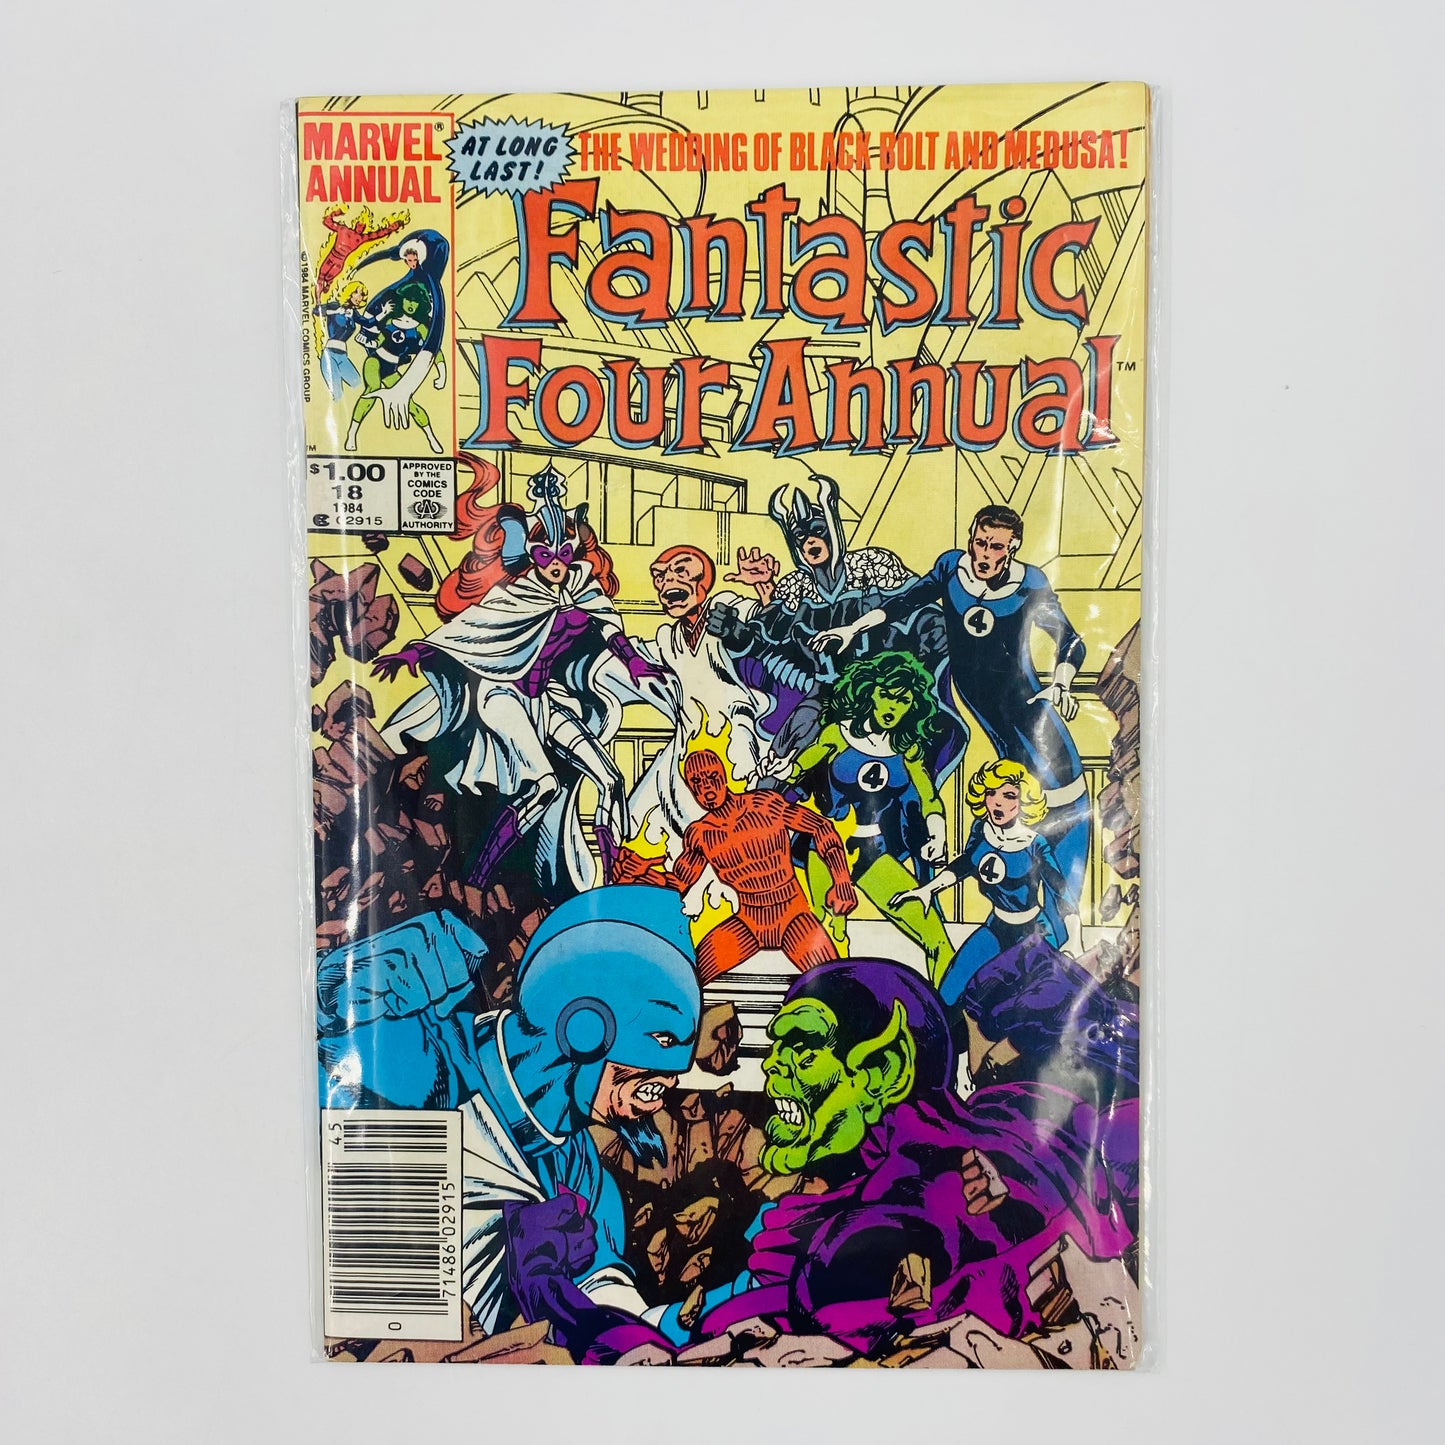 Fantastic Four Annual #18 “Something Old, Something New!" (1984) Marvel